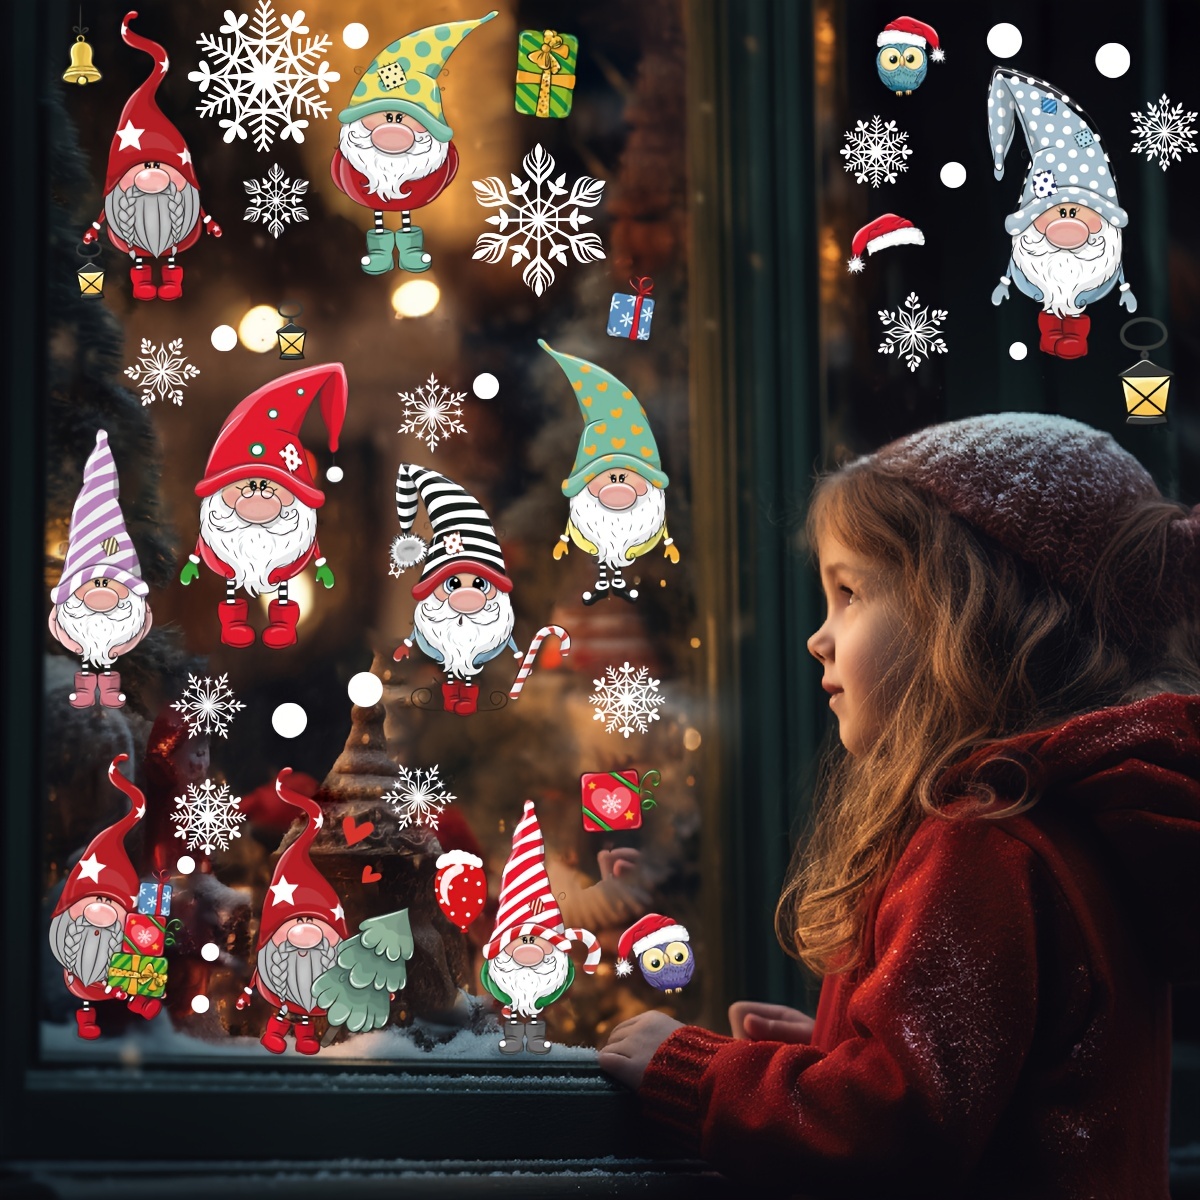 Pegatinas para ventana Disney Mickey Noël - Decoración para ventana - Eminza